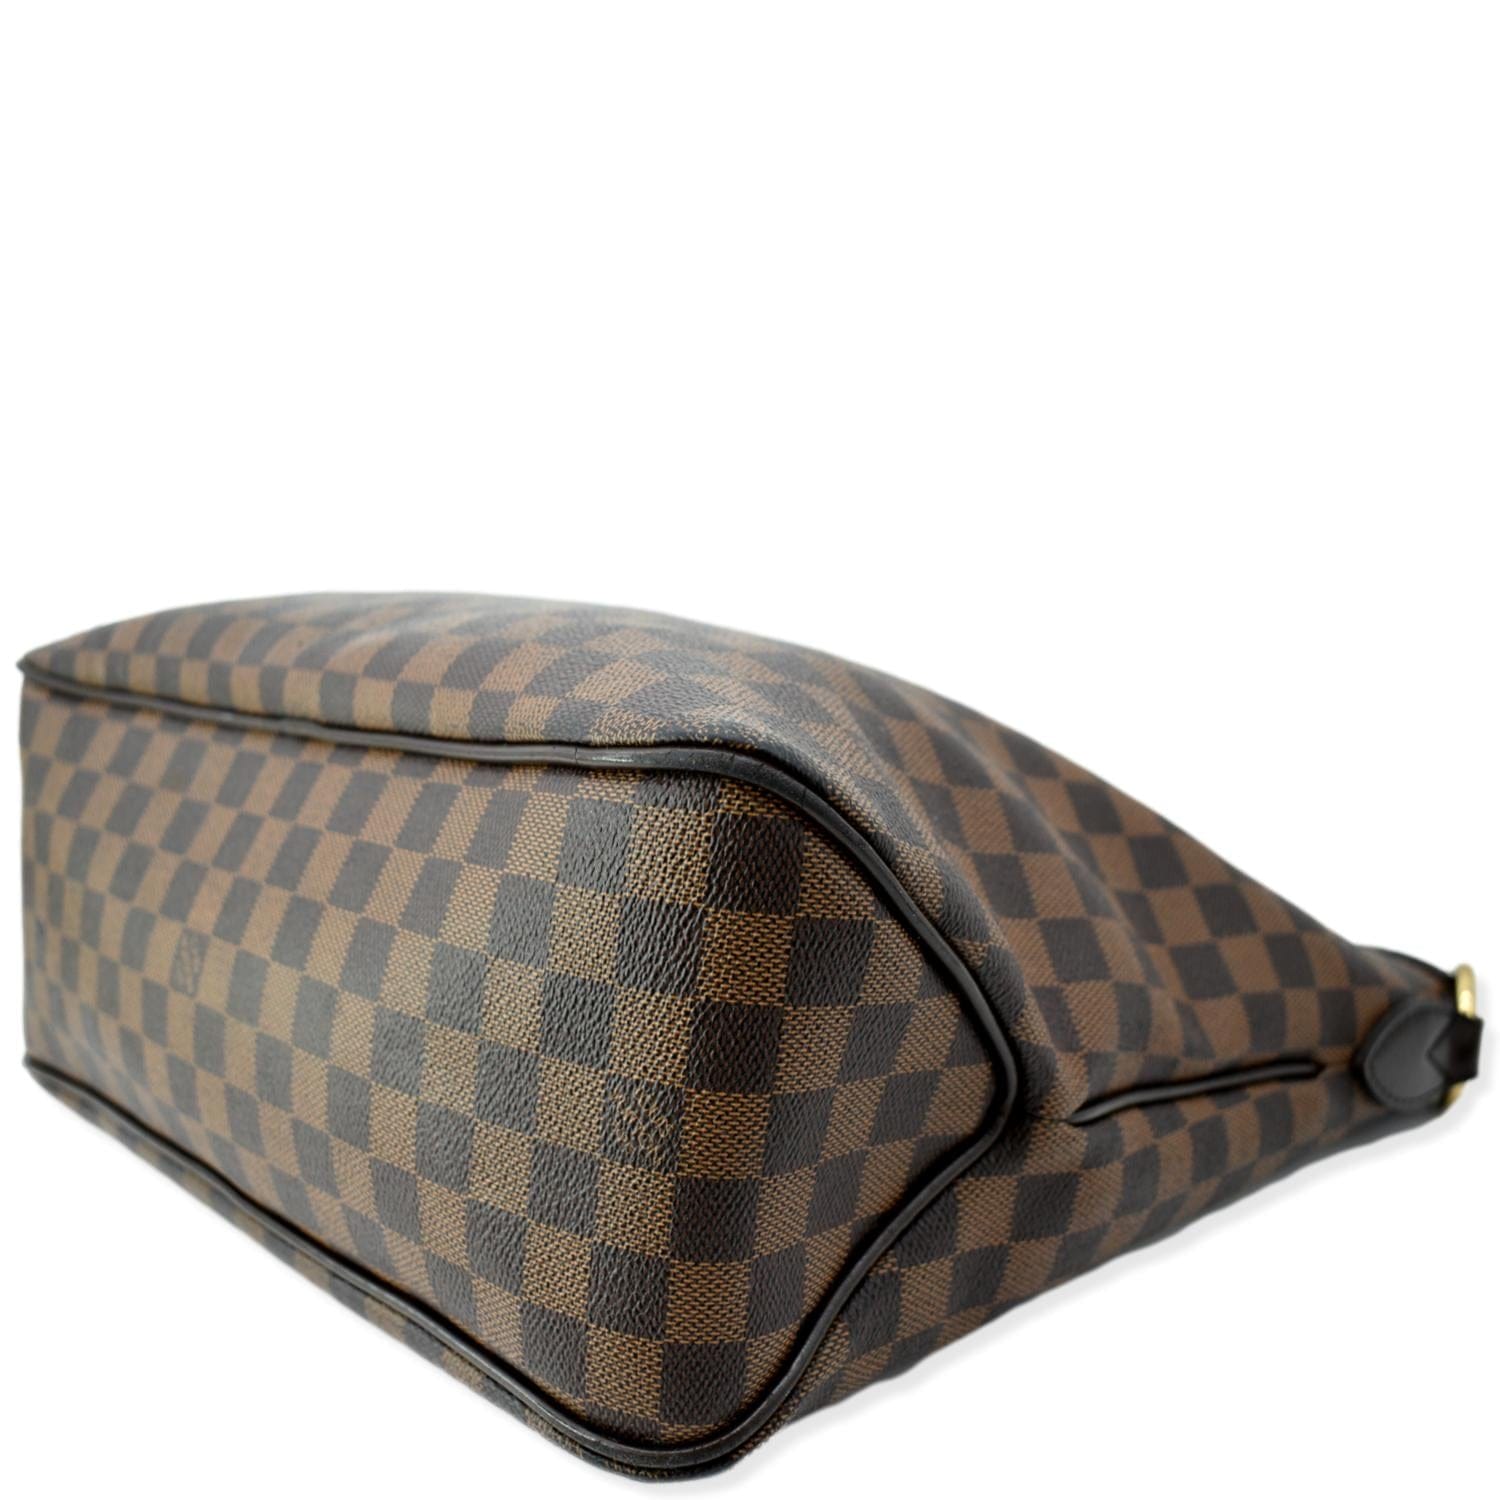 Louis Vuitton Damier Ebene Delightful PM - Brown Hobos, Handbags